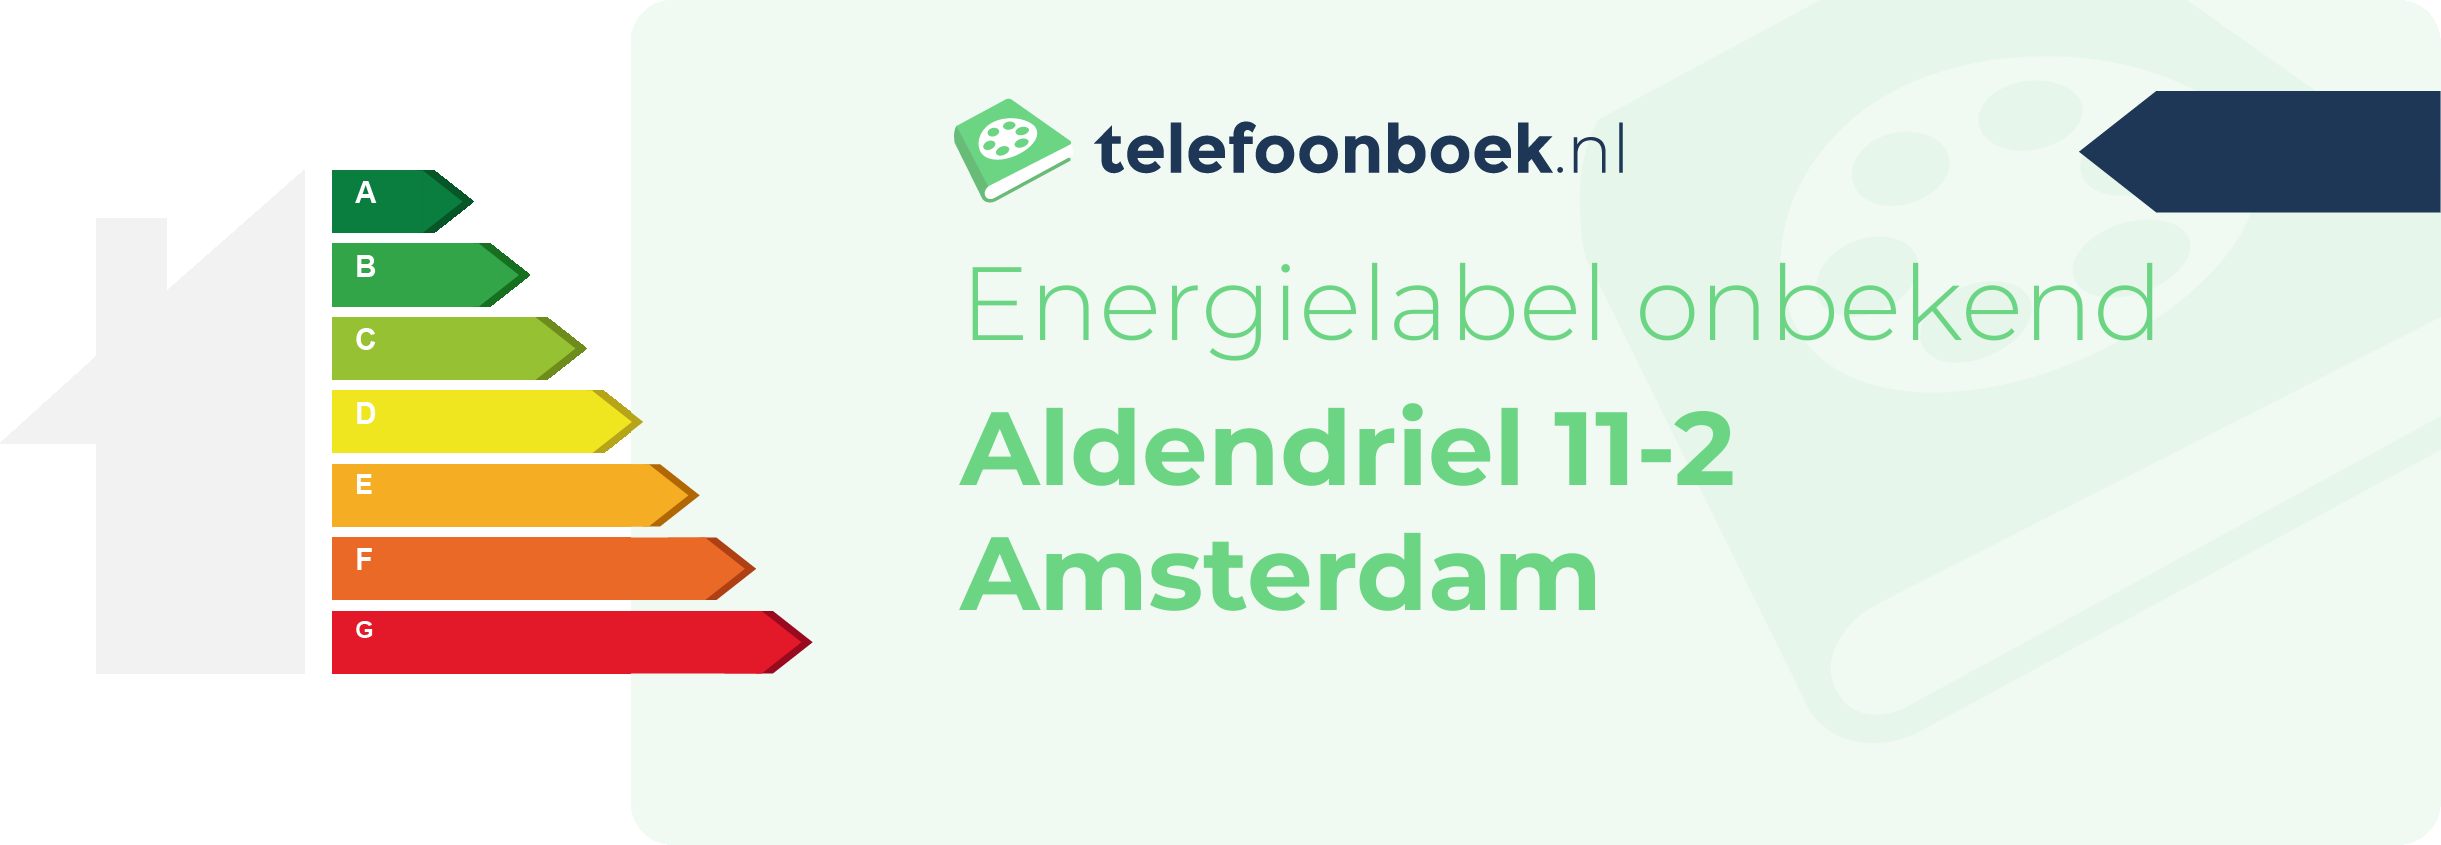 Energielabel Aldendriel 11-2 Amsterdam